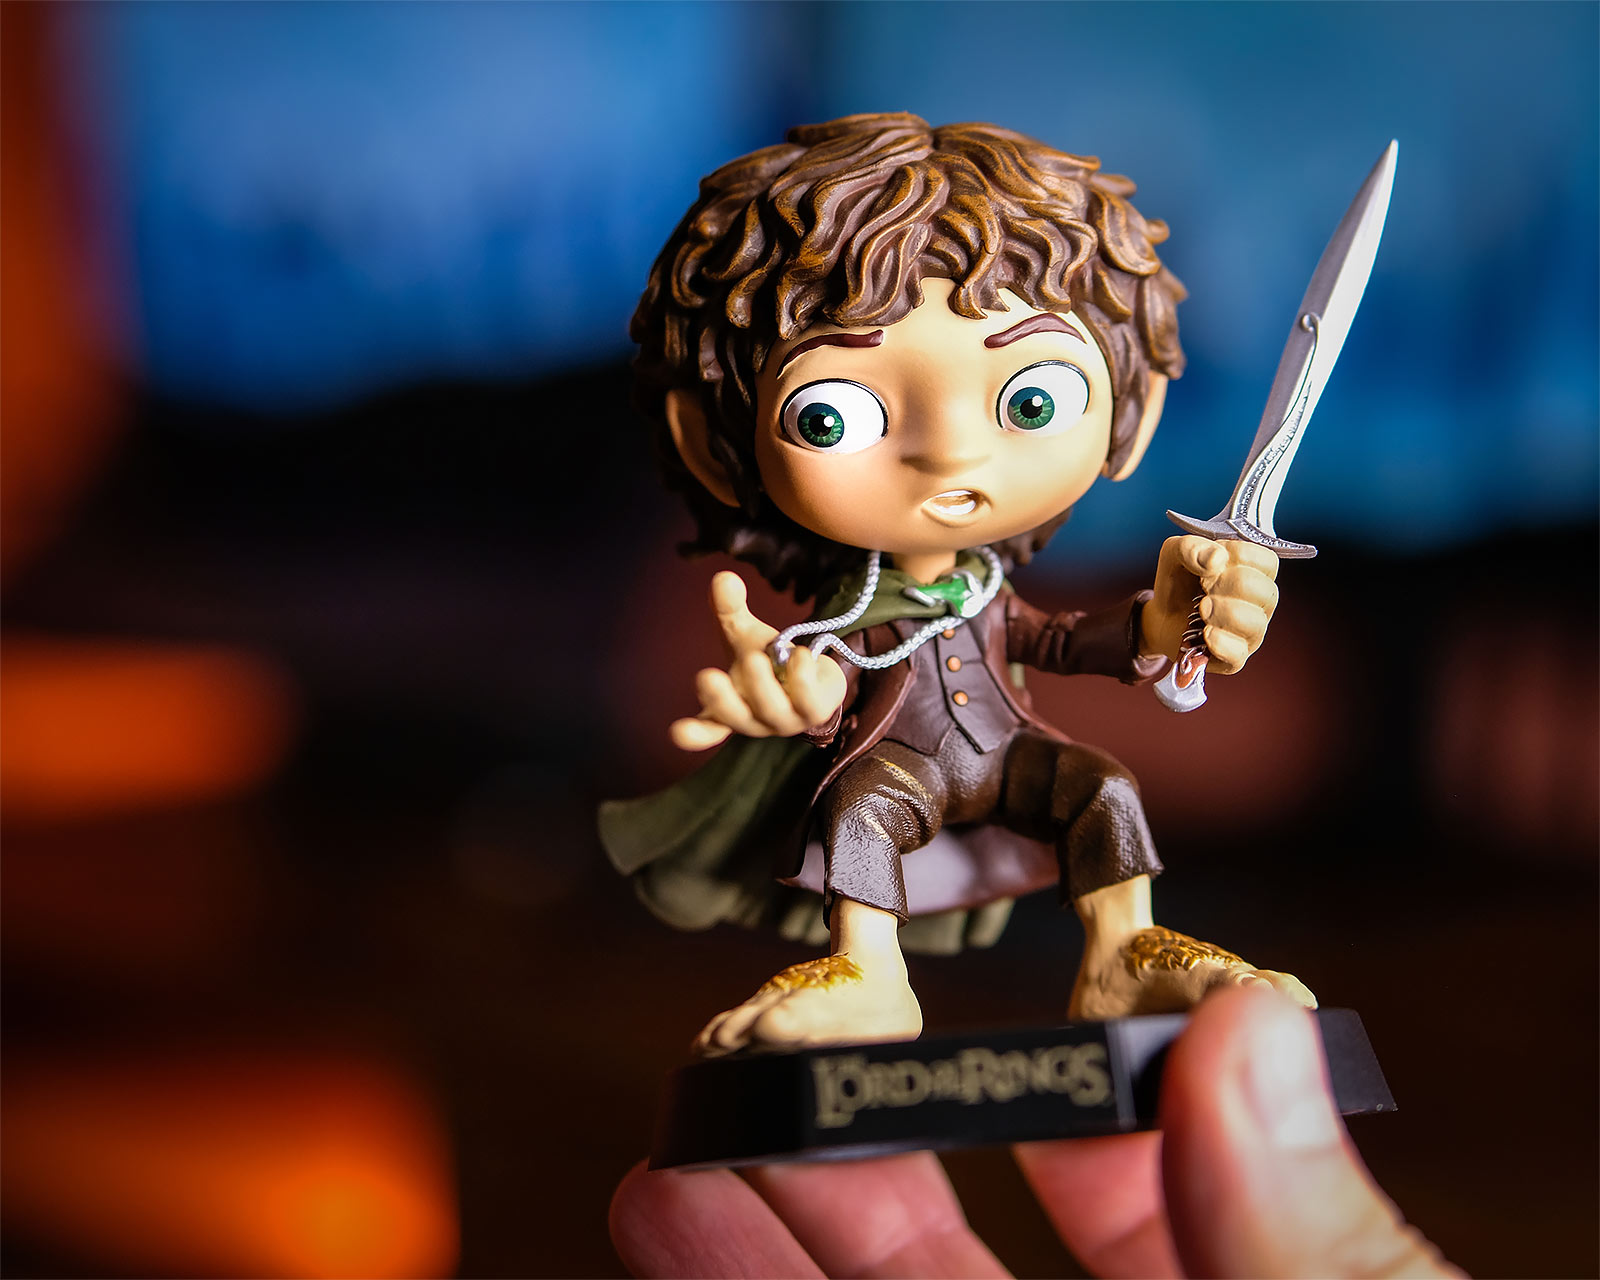 Lord of the Rings - Frodo Minico Beeldje